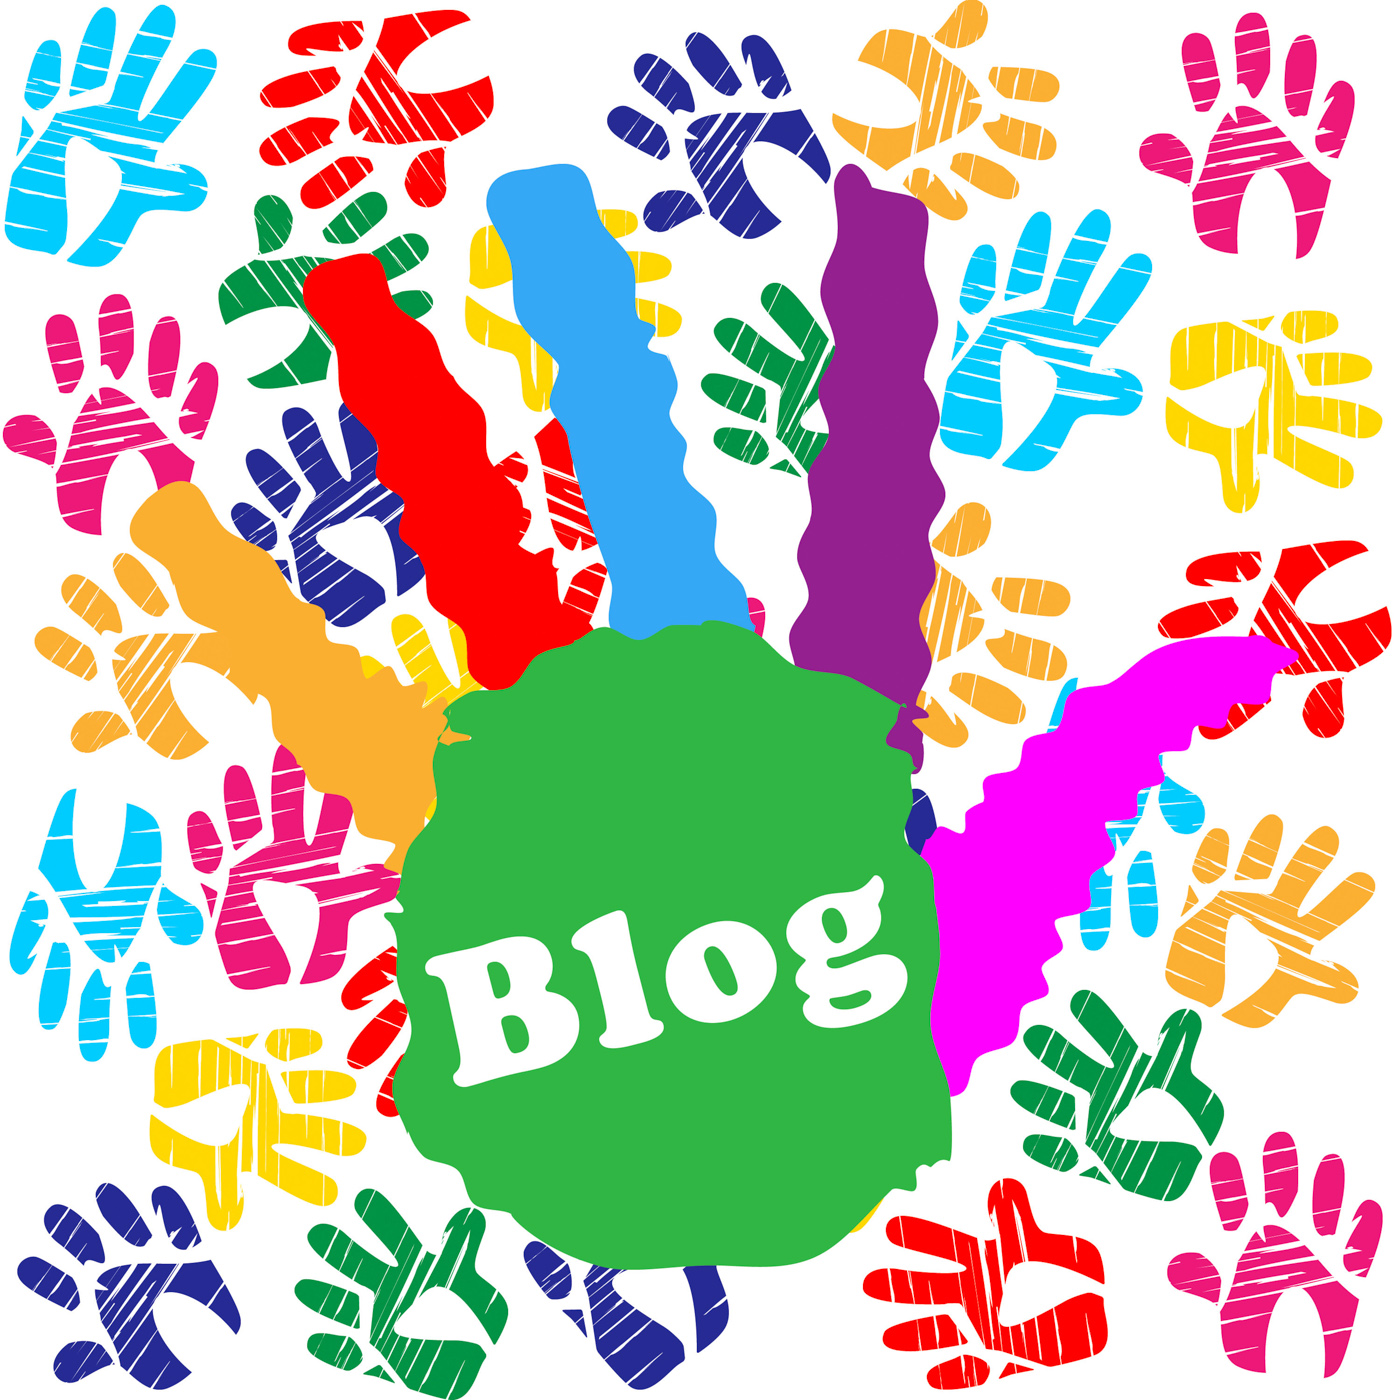 Kids blog indicates child online and website photo